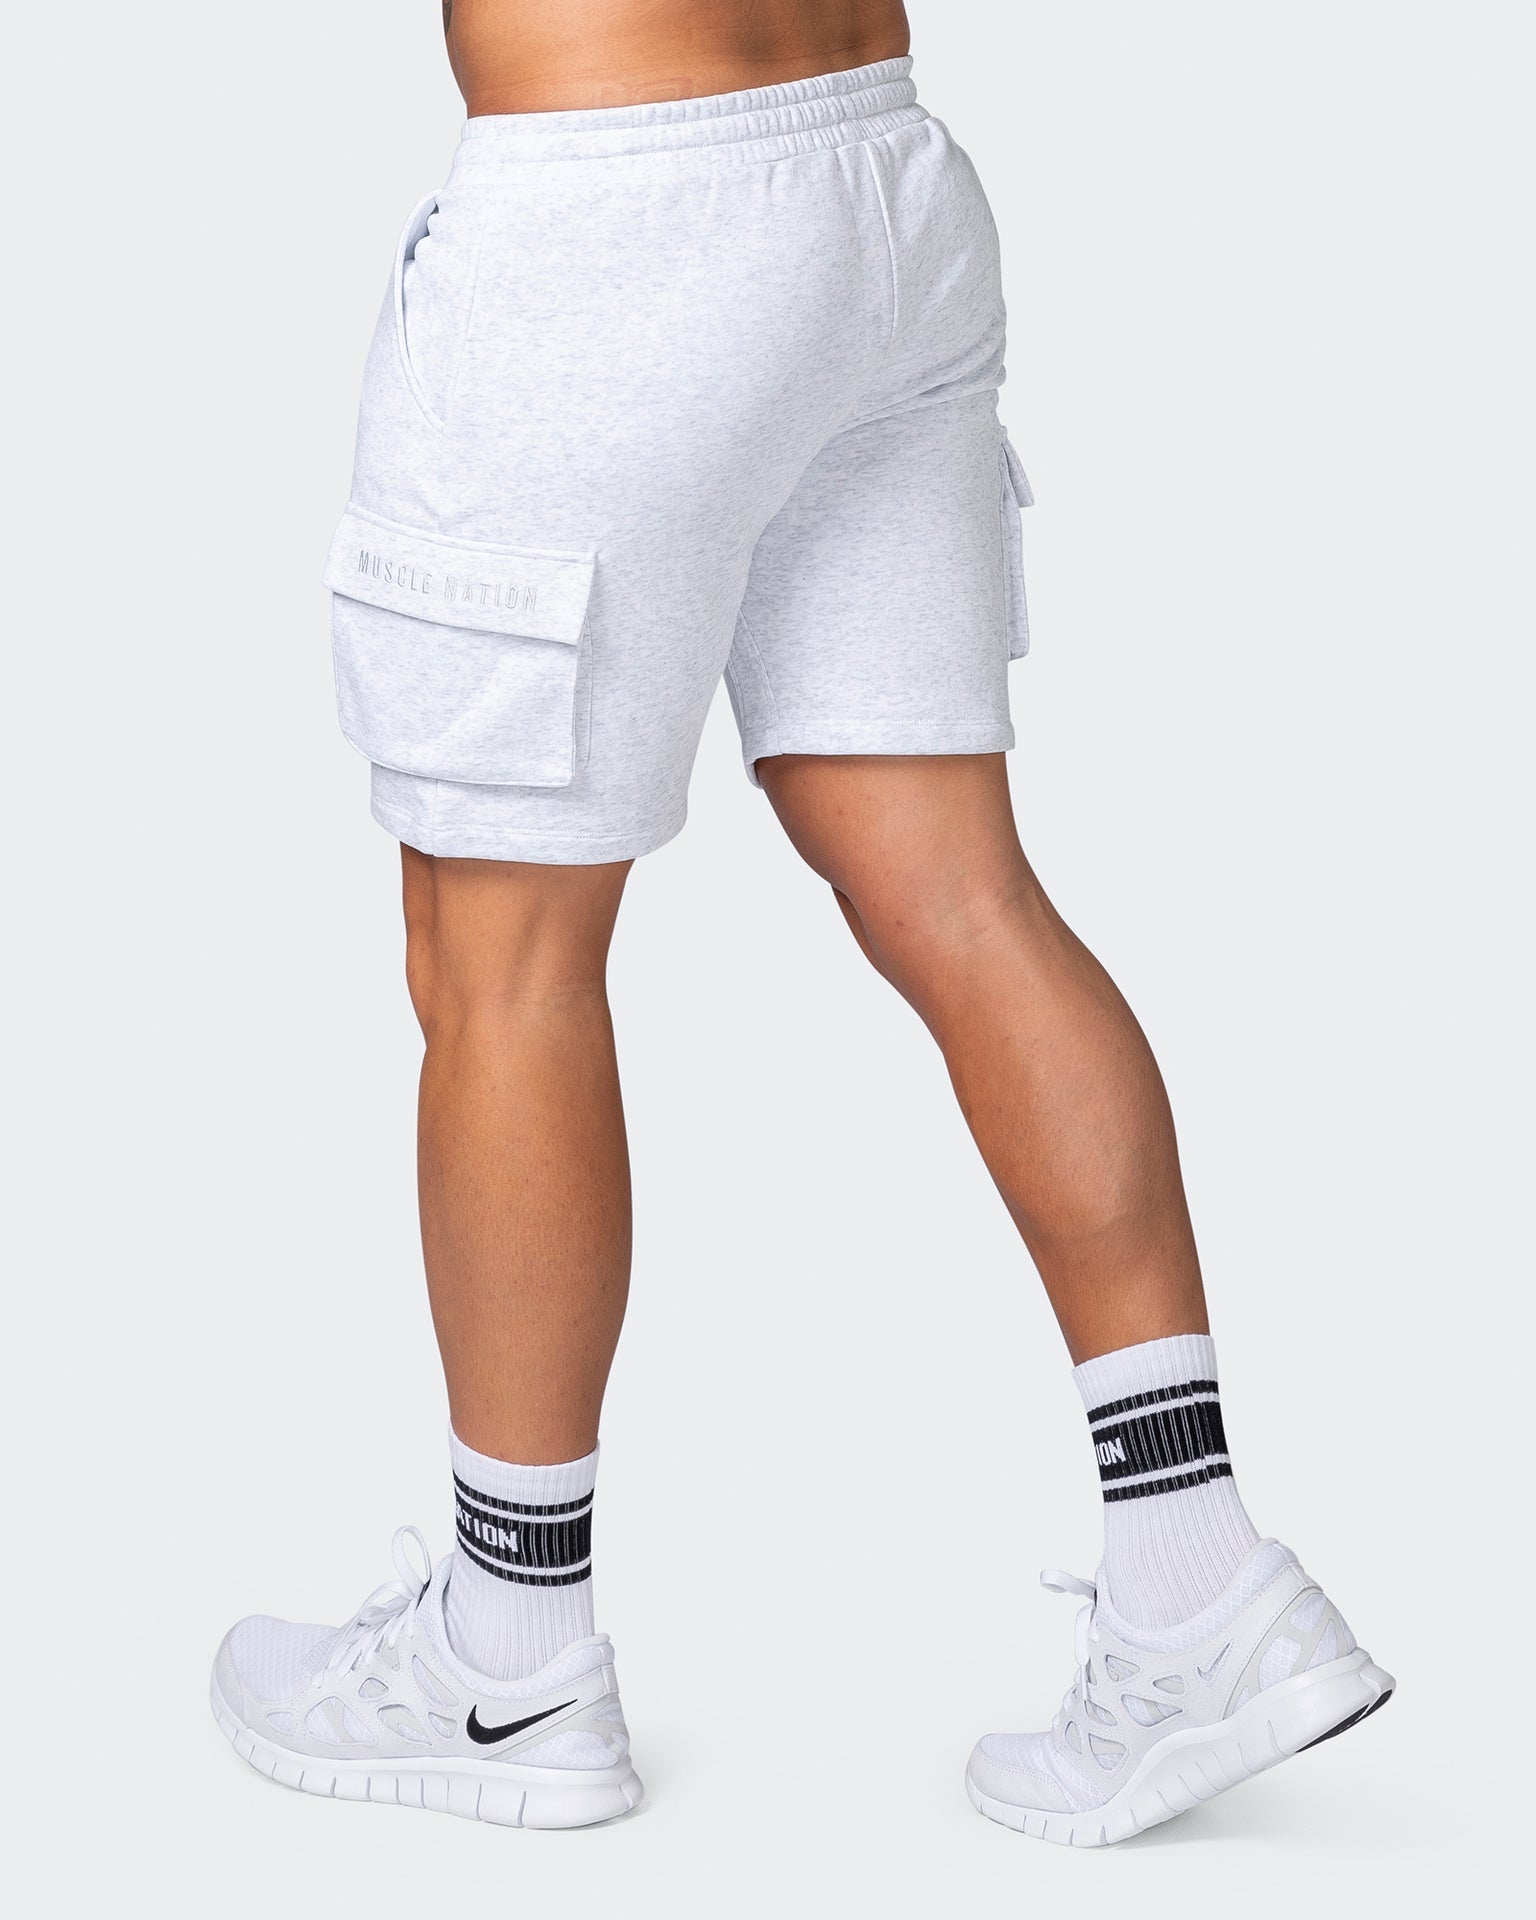 musclenation Activewear Cargo Shorts - White Marl